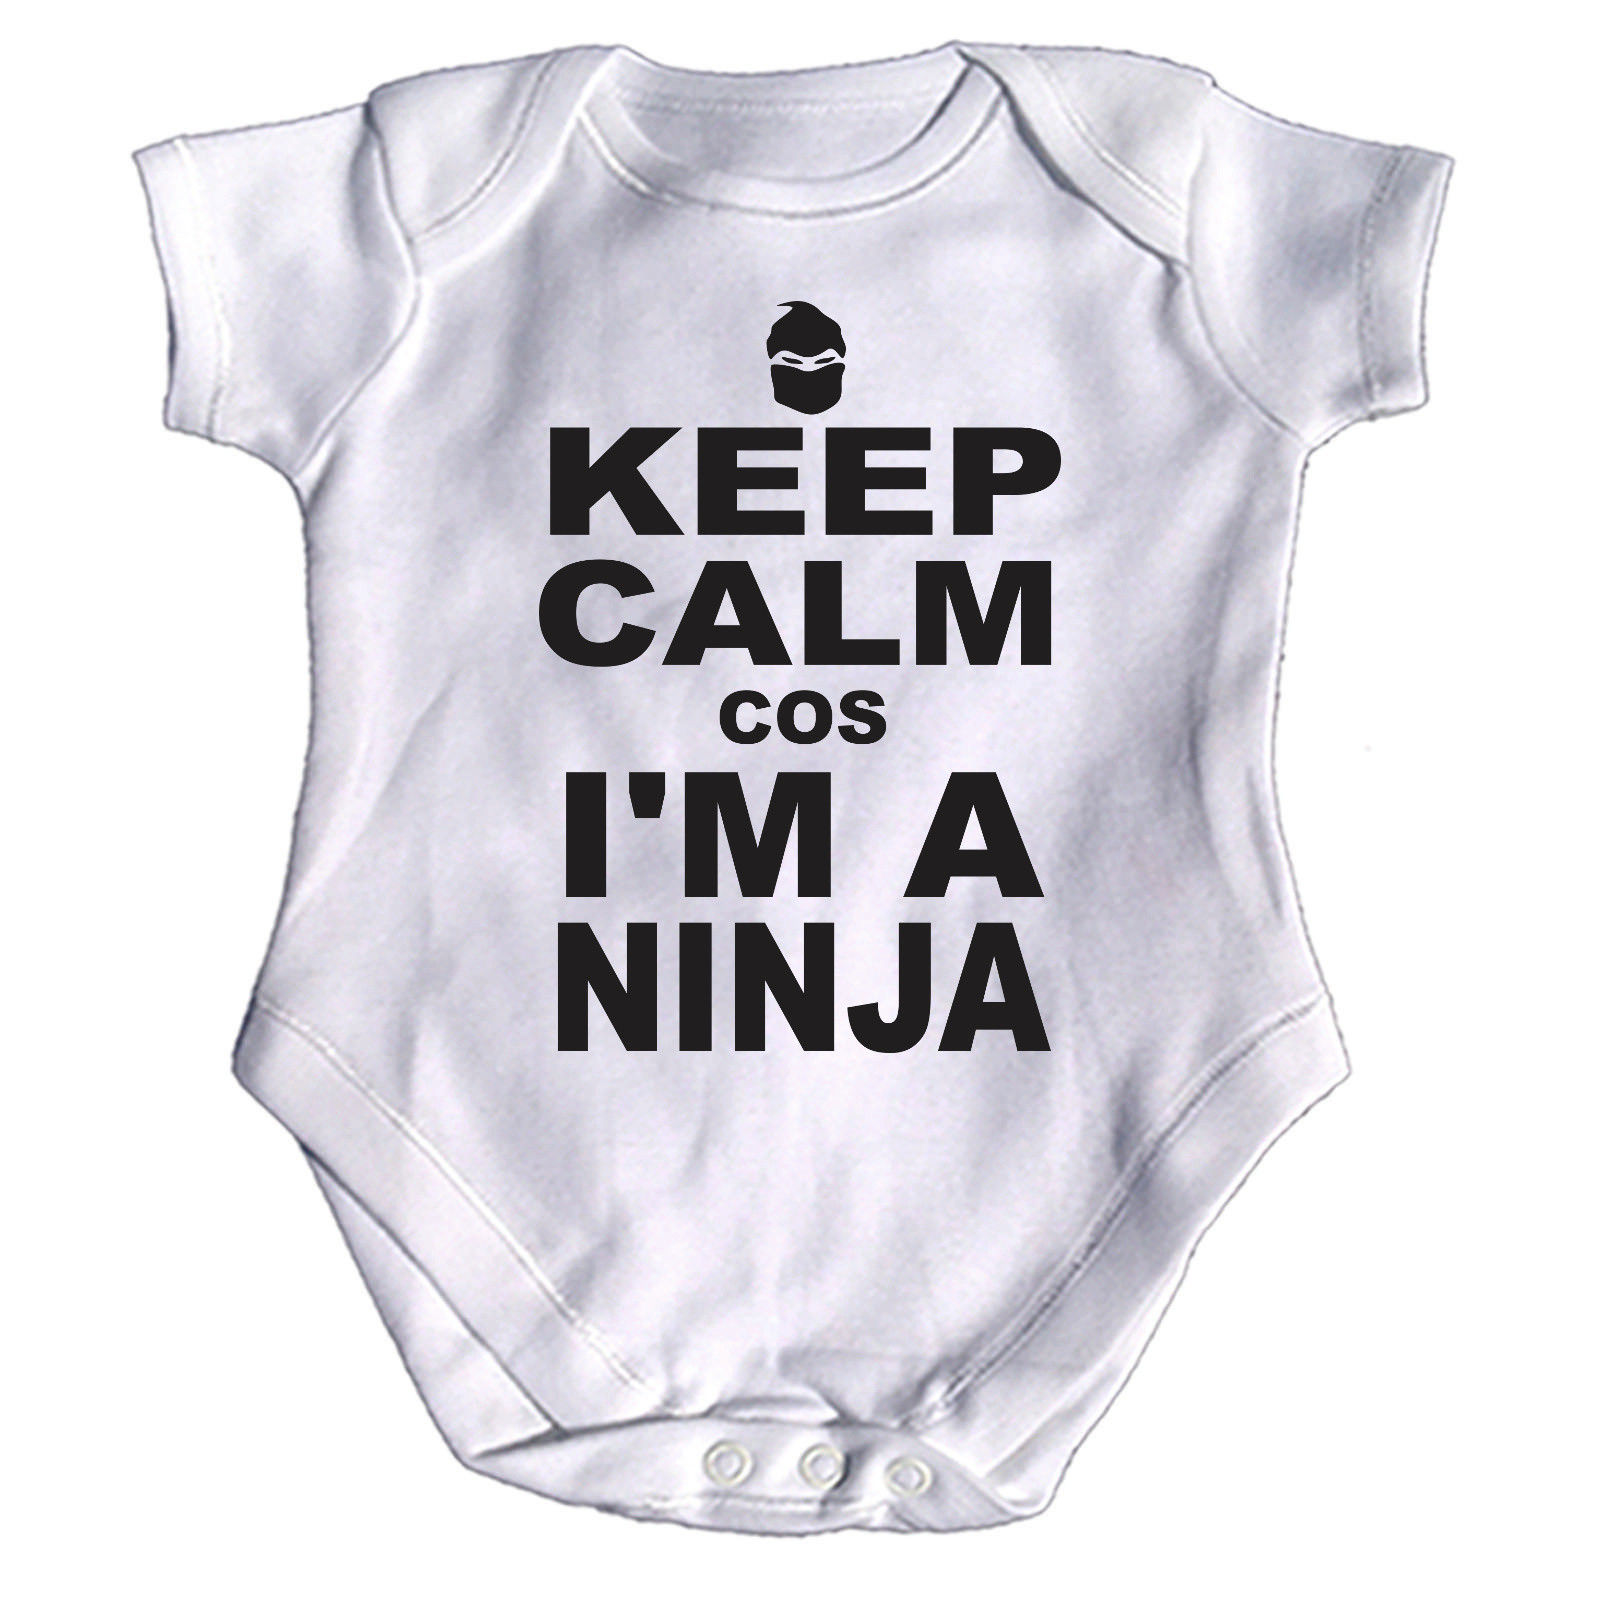 Funny Baby Infants Babygrow Romper Jumpsuit Keep Calm Ninja 